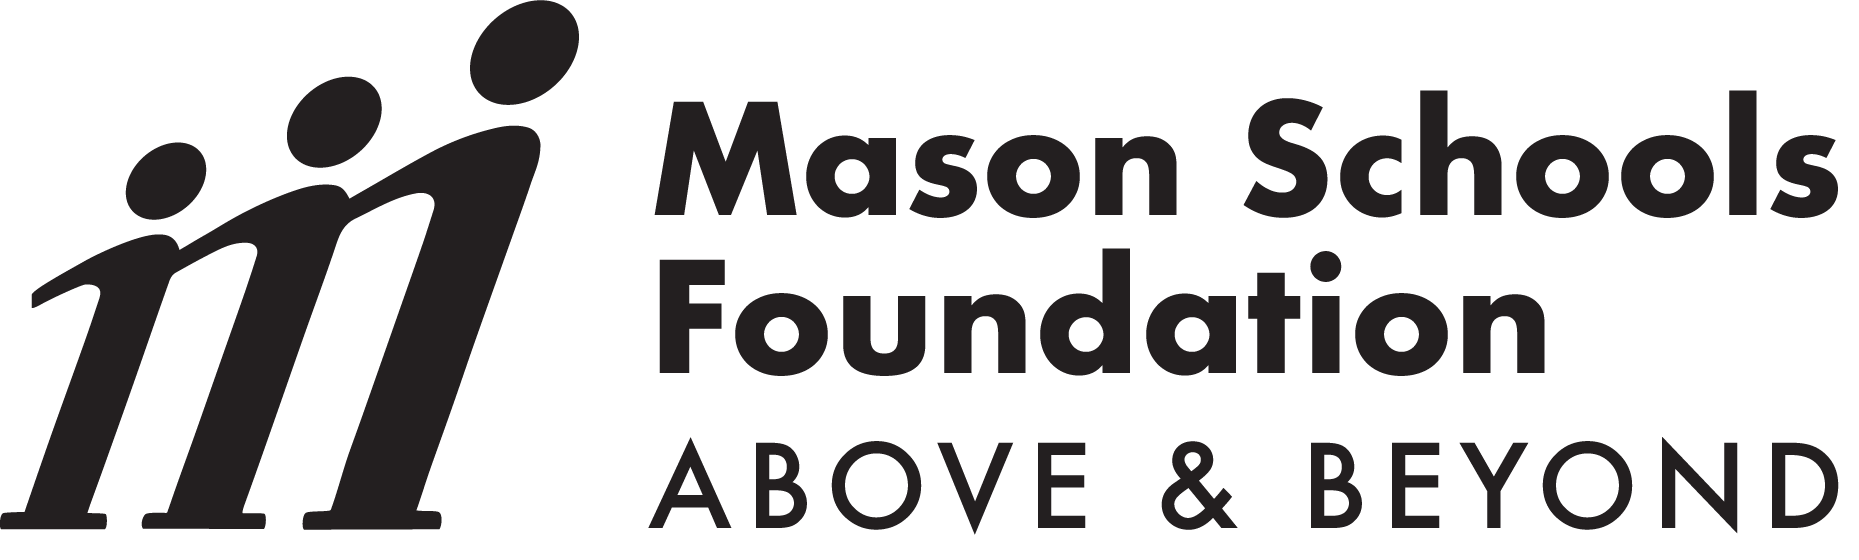 Mason schools foundation logo, black